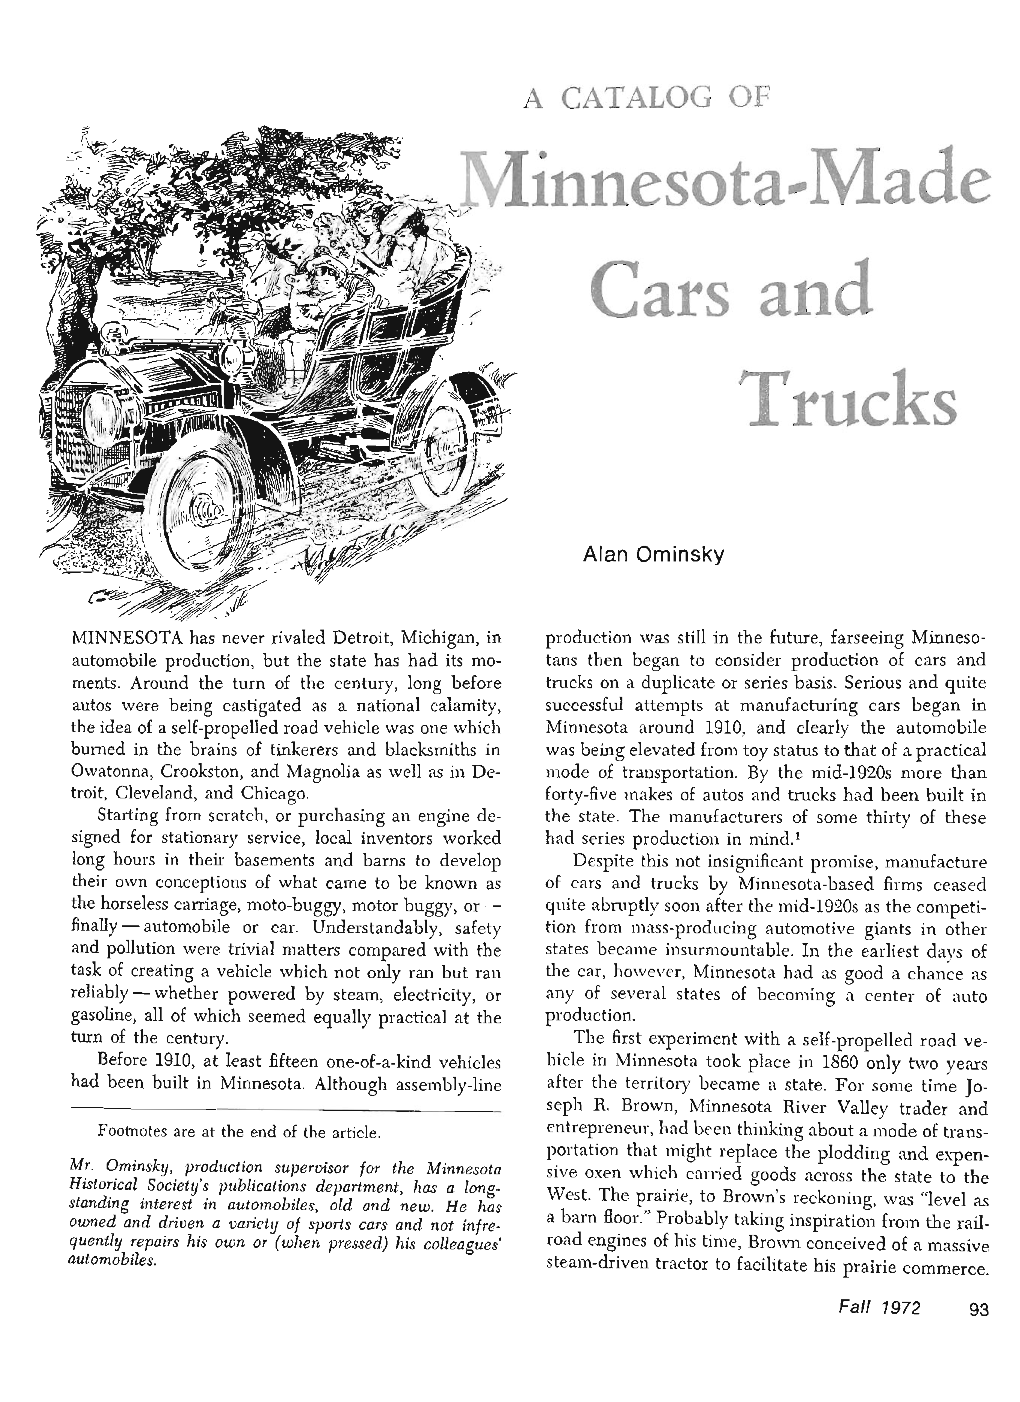 A Catalog of Minnesota-Made Cars and Trucks / Alan Ominsky